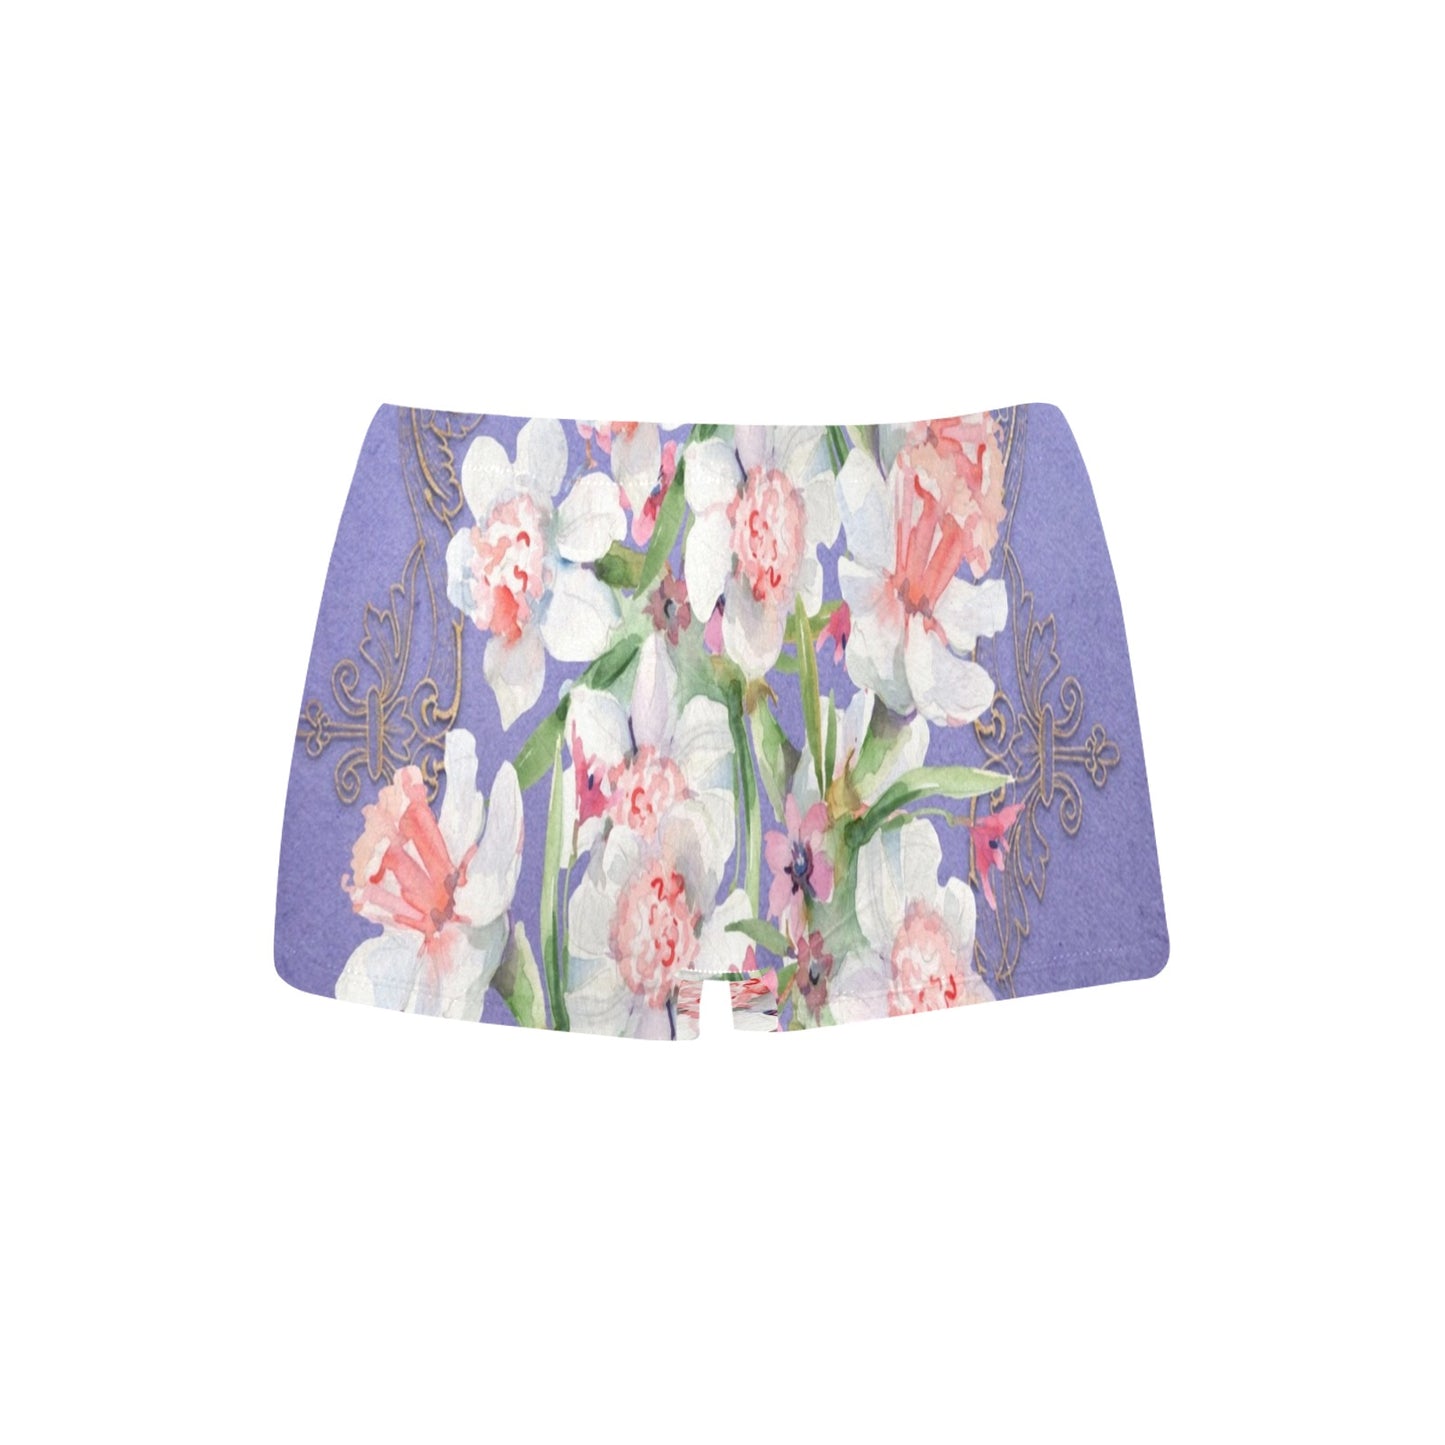 Printed Lace Boyshorts, daisy dukes, pum pum shorts, shortie shorts , design 47